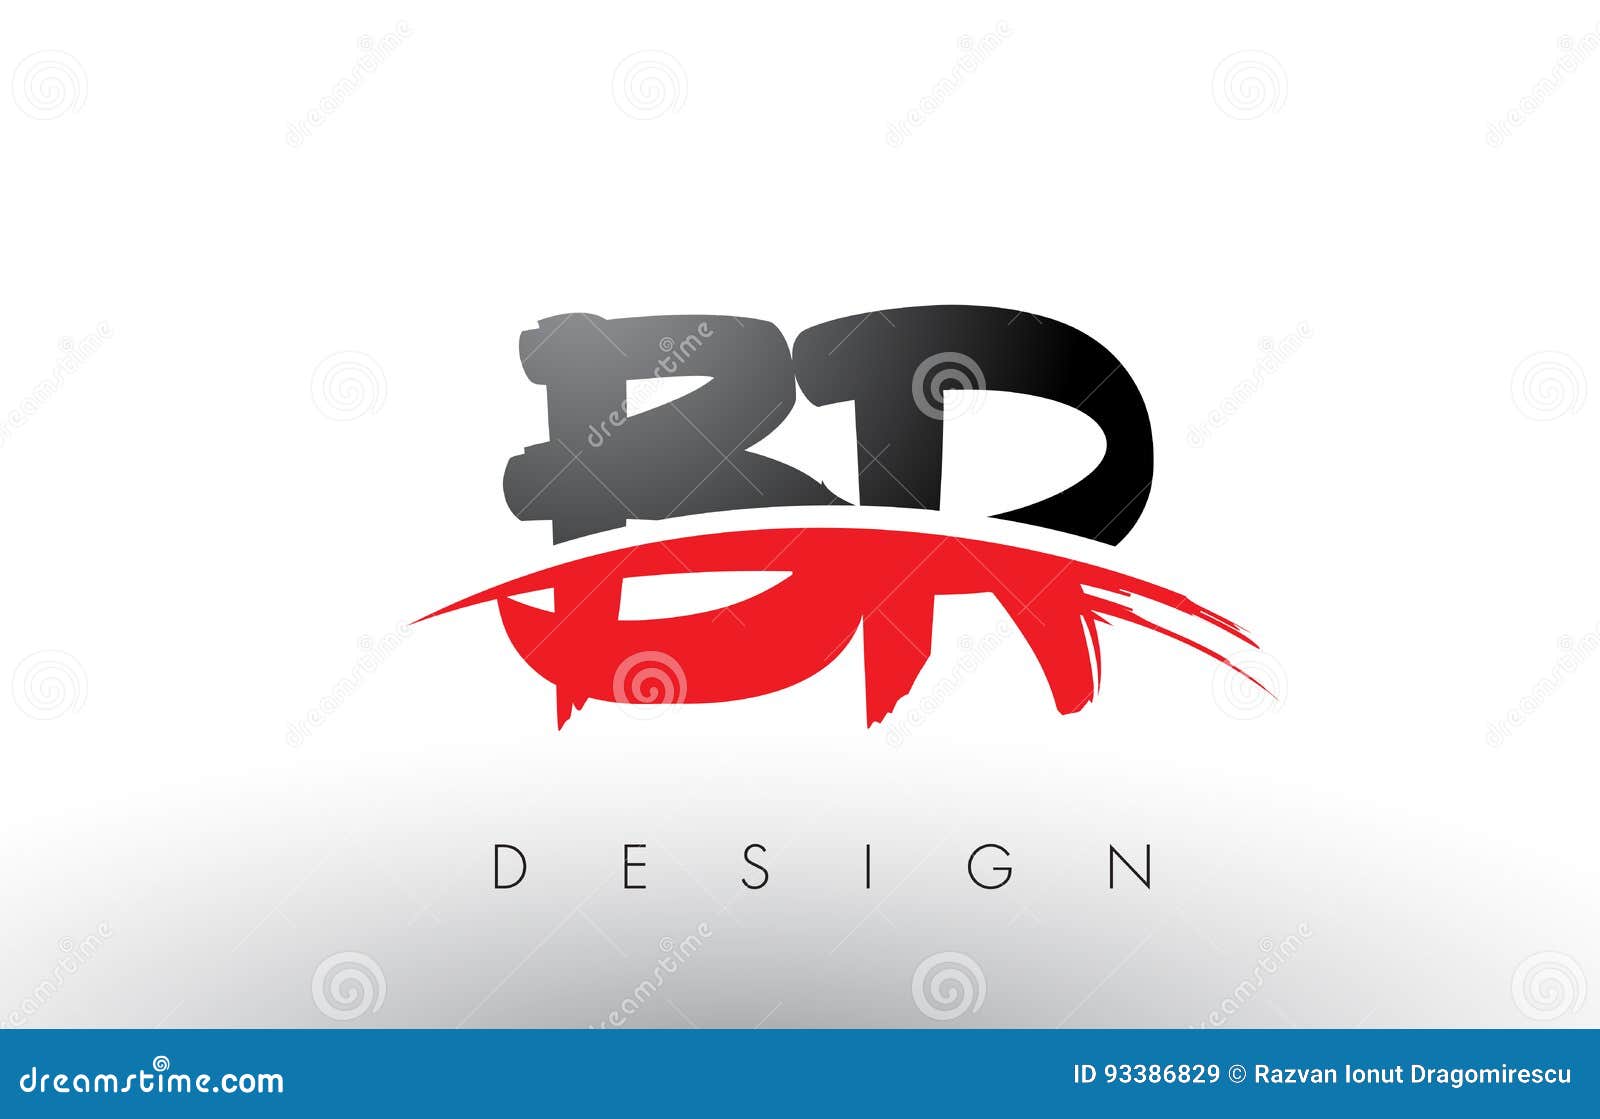 Br Logo Stock Illustrations – 1,561 Br Logo Stock Illustrations, Vectors   Clipart - Dreamstime